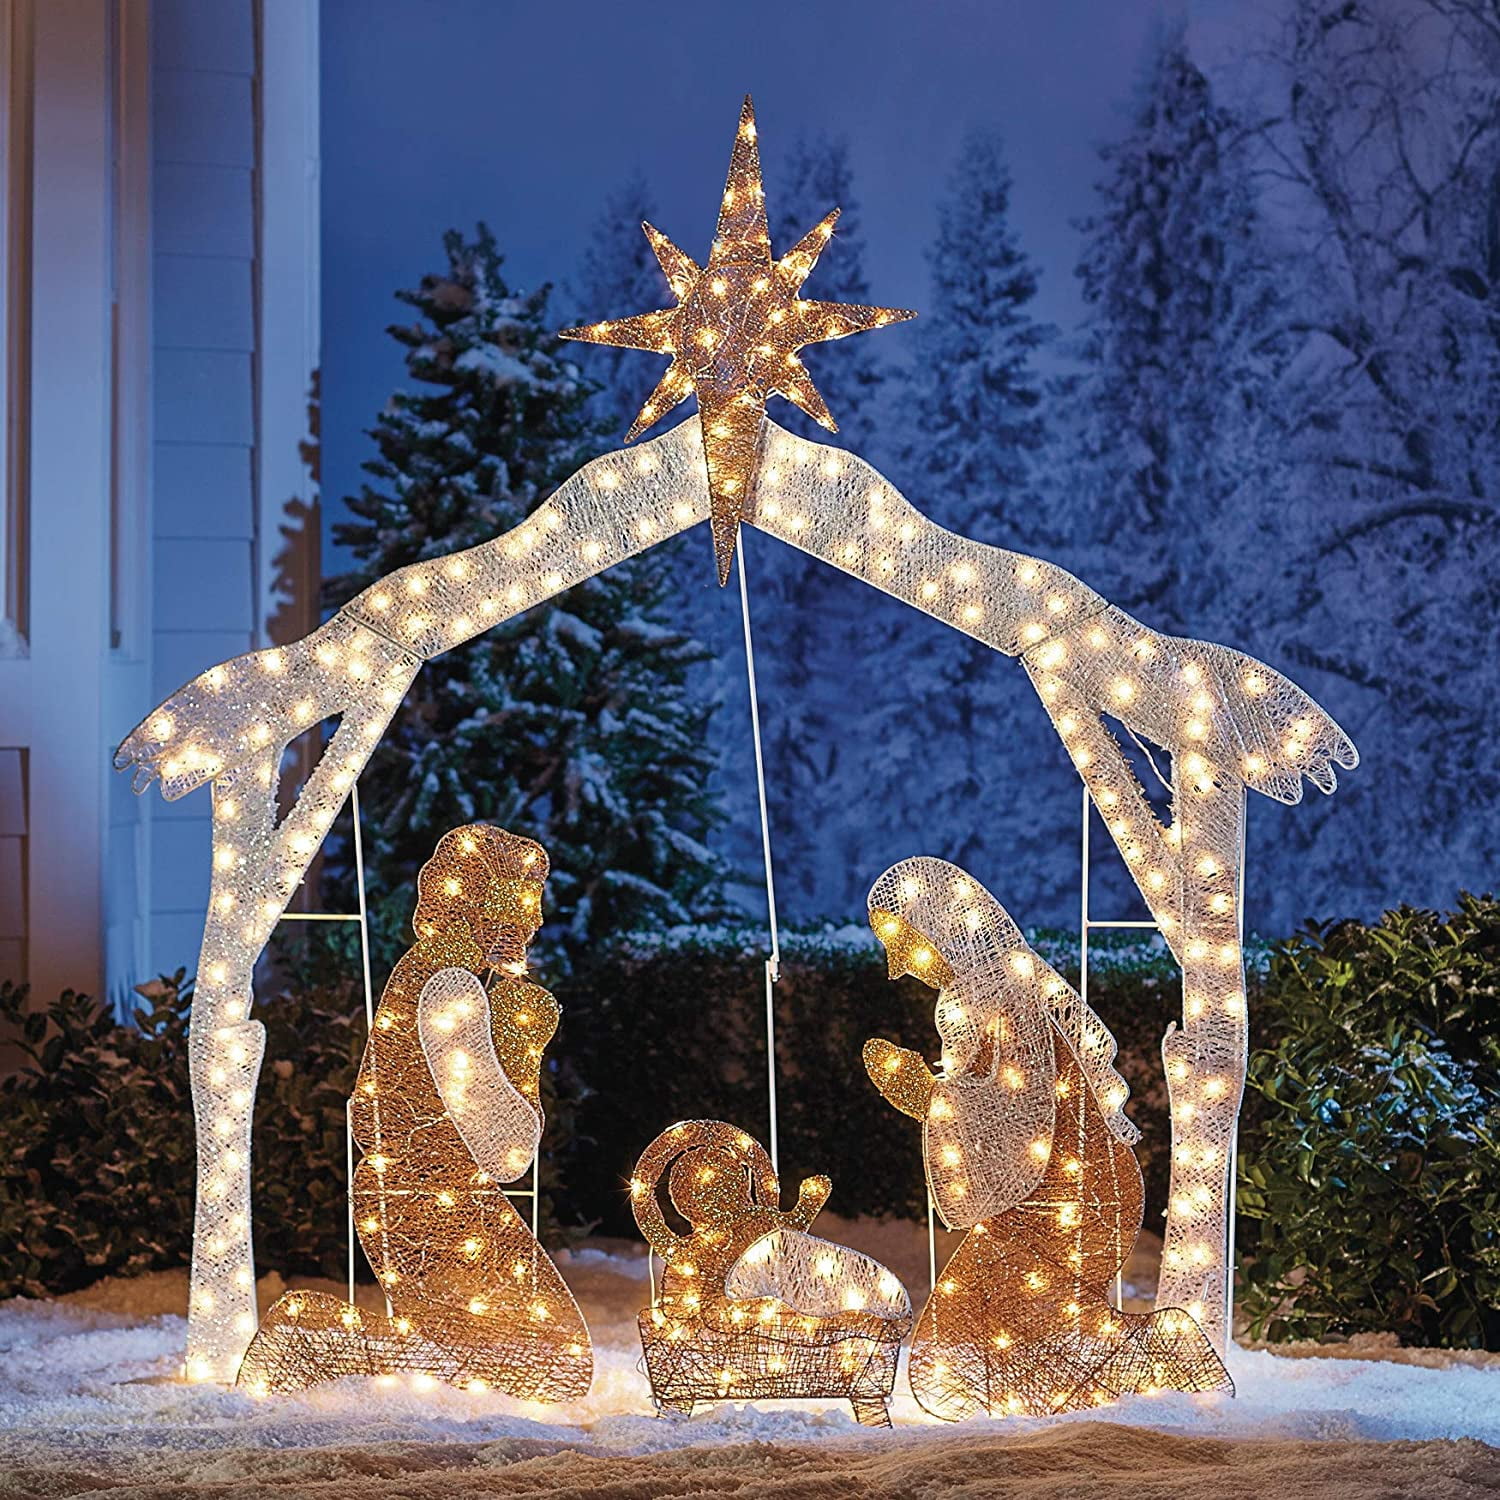 LED Lighted Nativity Scene Holiday Decoration Christmas Outdoor 